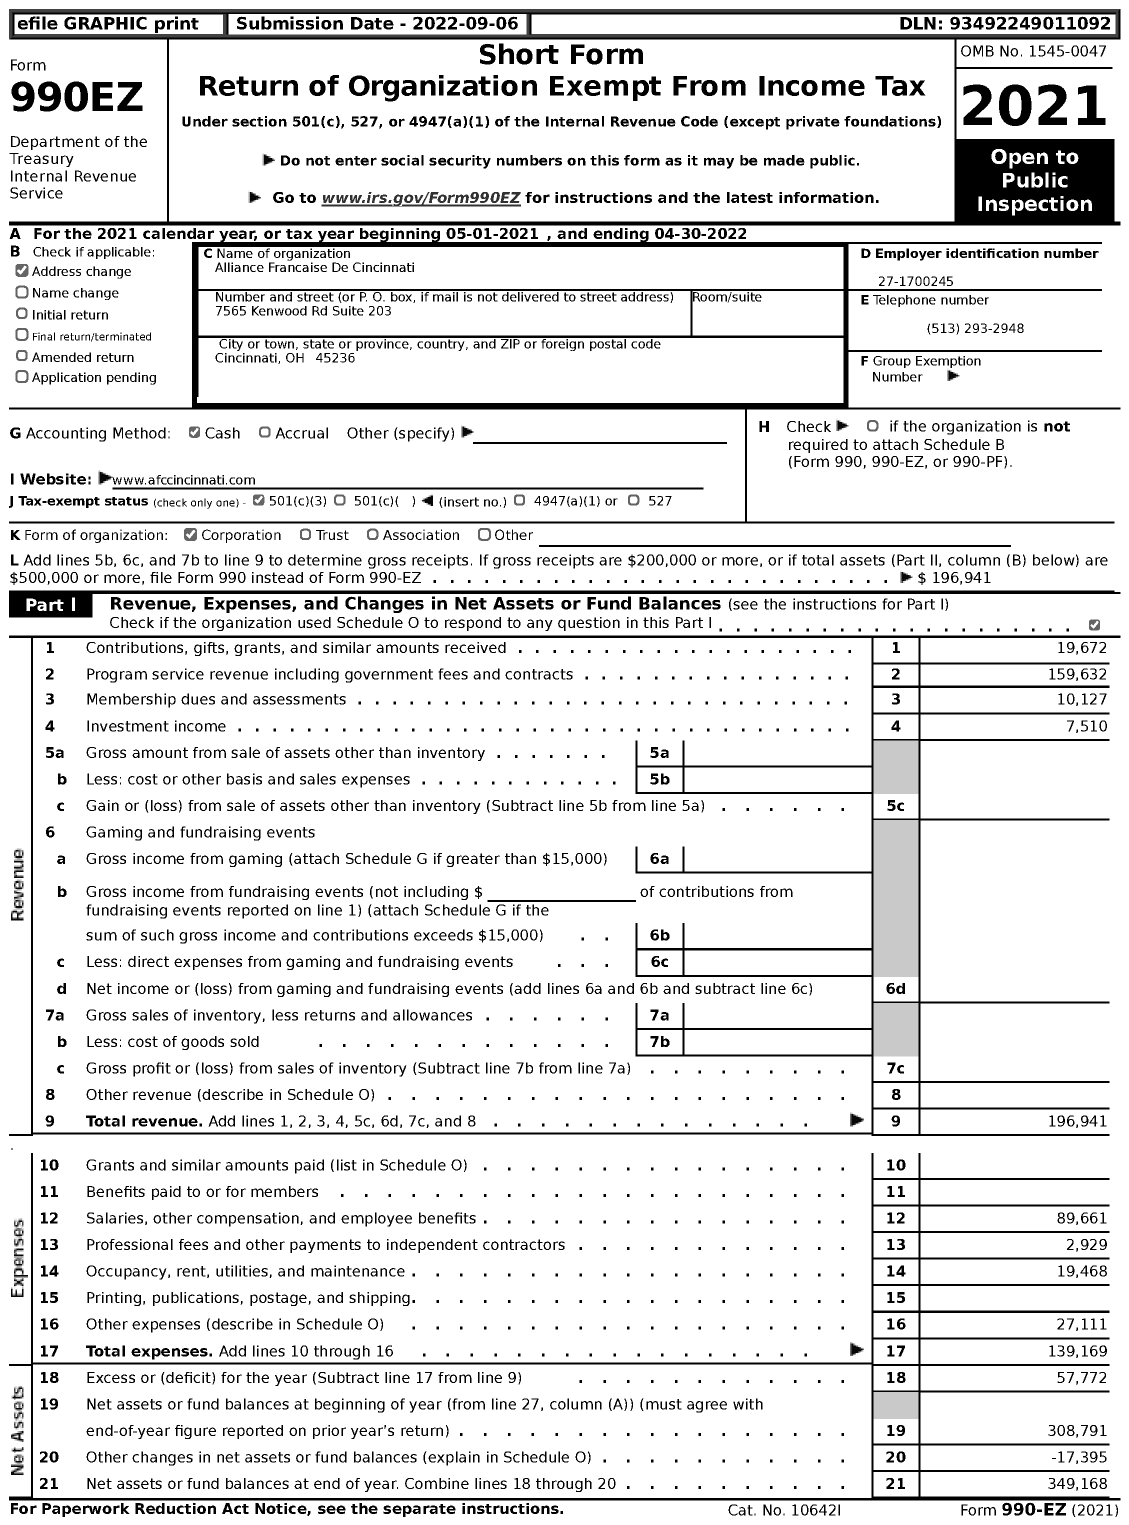 Image of first page of 2021 Form 990EZ for Alliance Francaise De Cincinnati